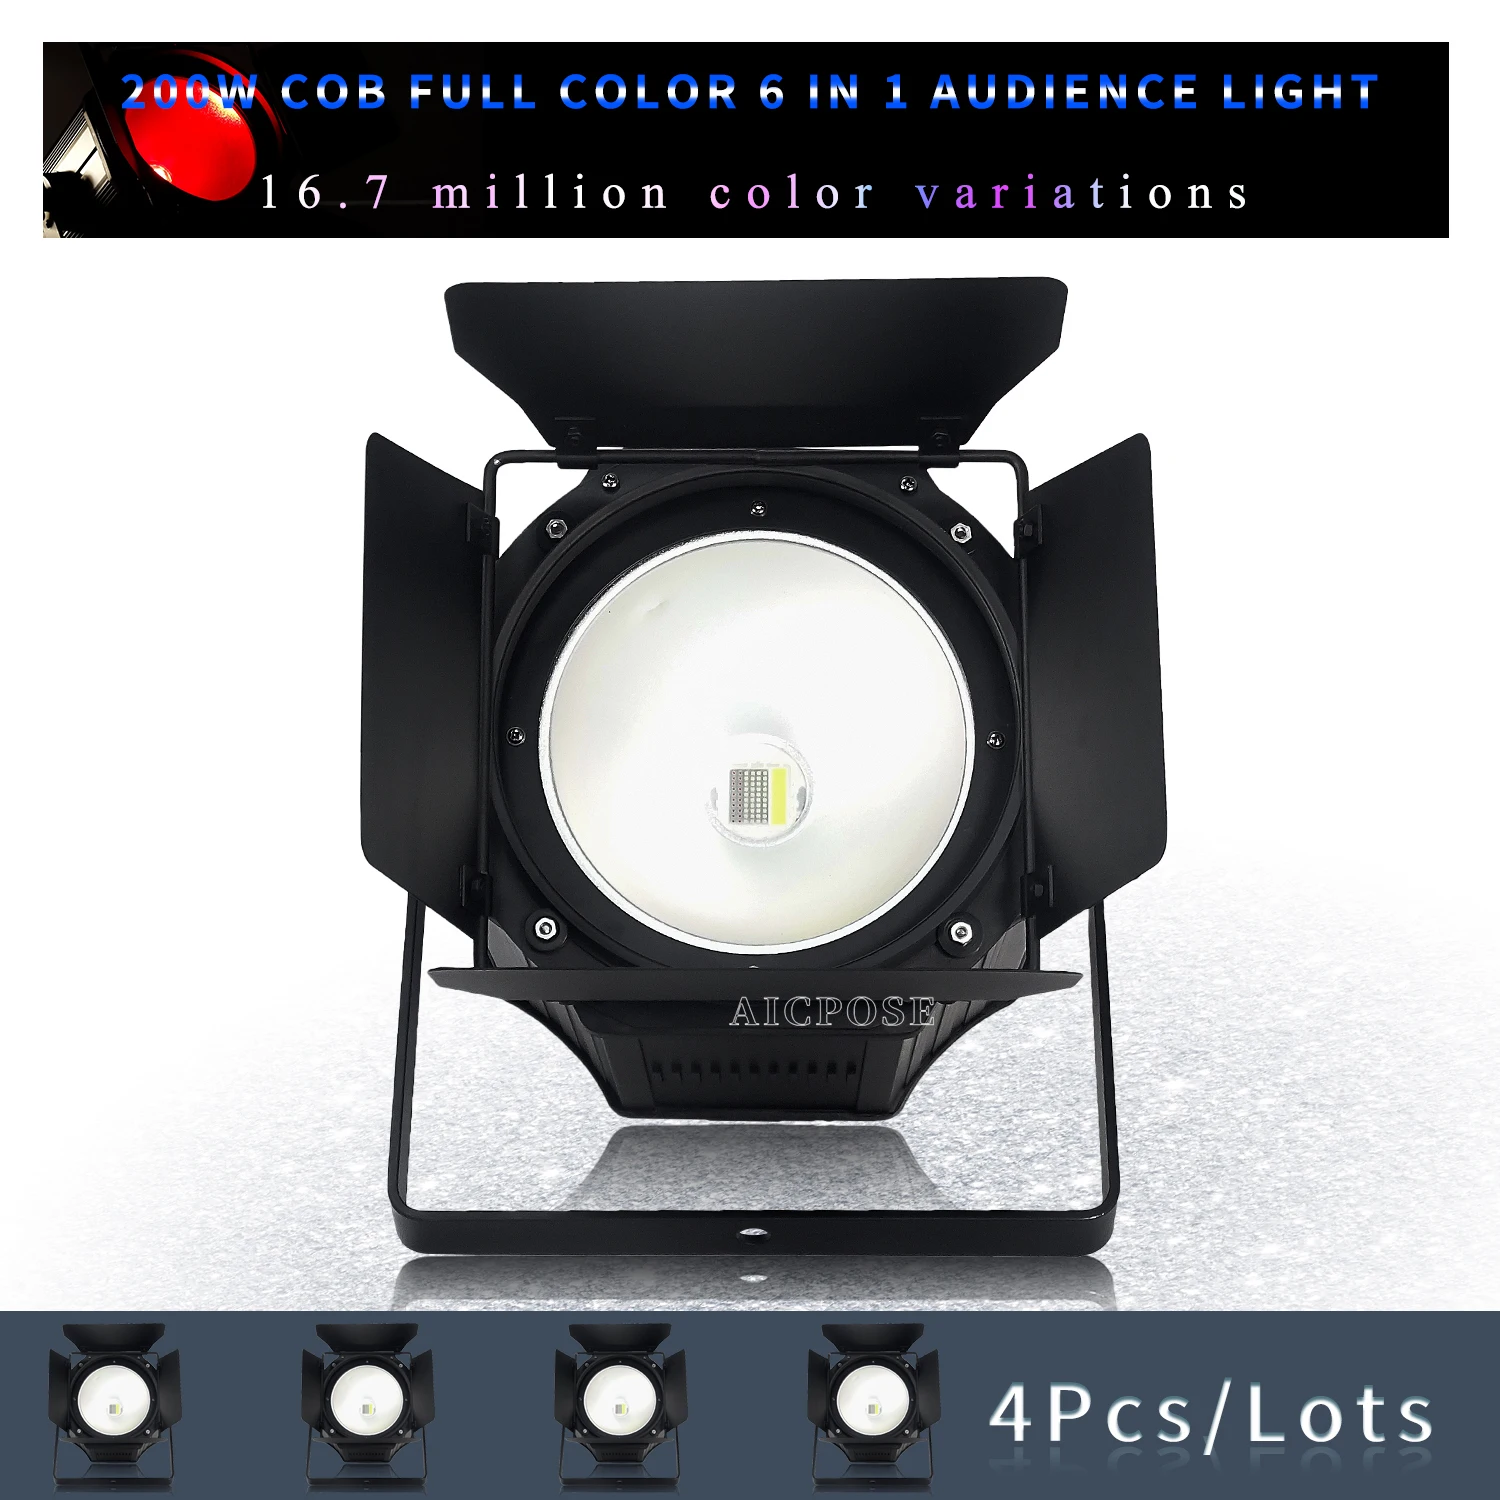 

4Pcs/Lots 200W COB with Light Barrier Stage Light RGBWA UV 6 in 1 LED Par Light DMX Control DJ Disco Equipment Lighting